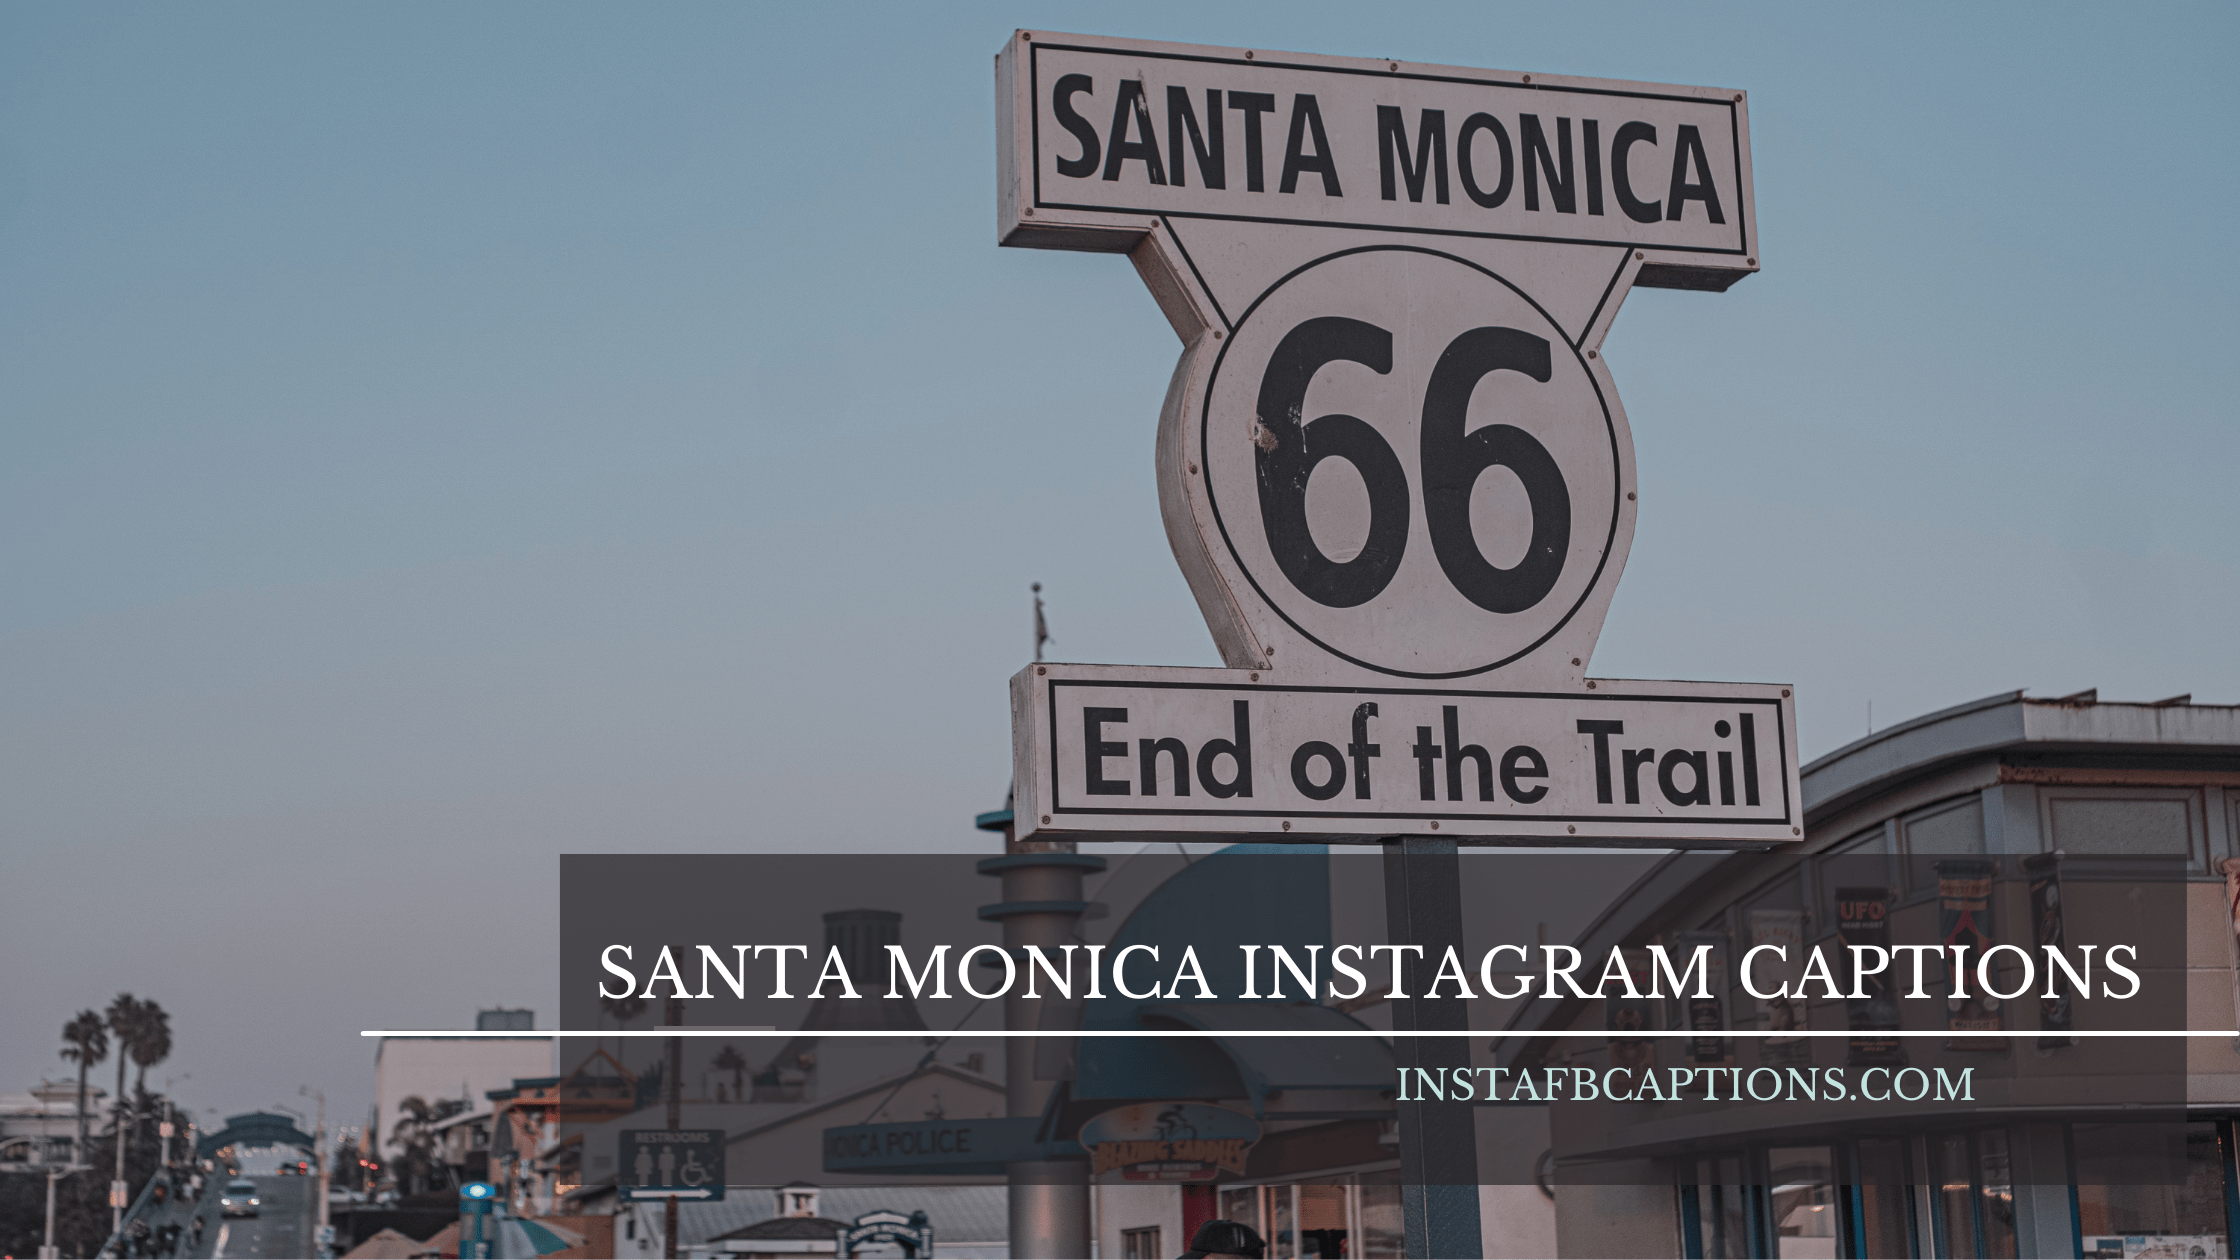 Santa Monica Instagram Captions  - Santa Monica Instagram Captions - 98 Santa Monica Instagram Captions for Pier in 2022